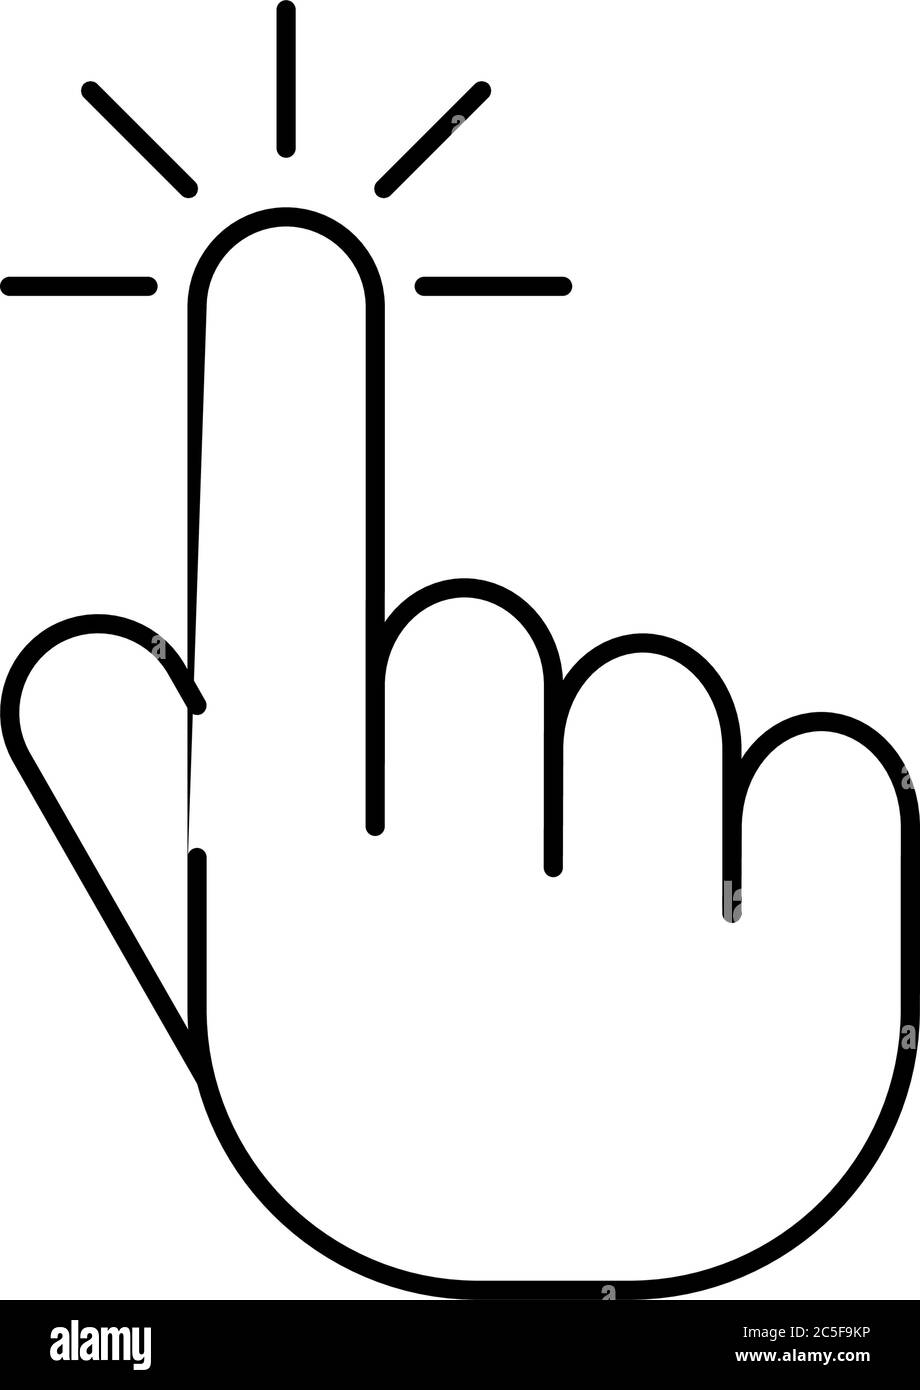 Computer-Maus Handfinger Cursor Symbol Bildschirm Schnittstelle Zeiger Symbol Vektor-Illustration für Web oder App Stock Vektor